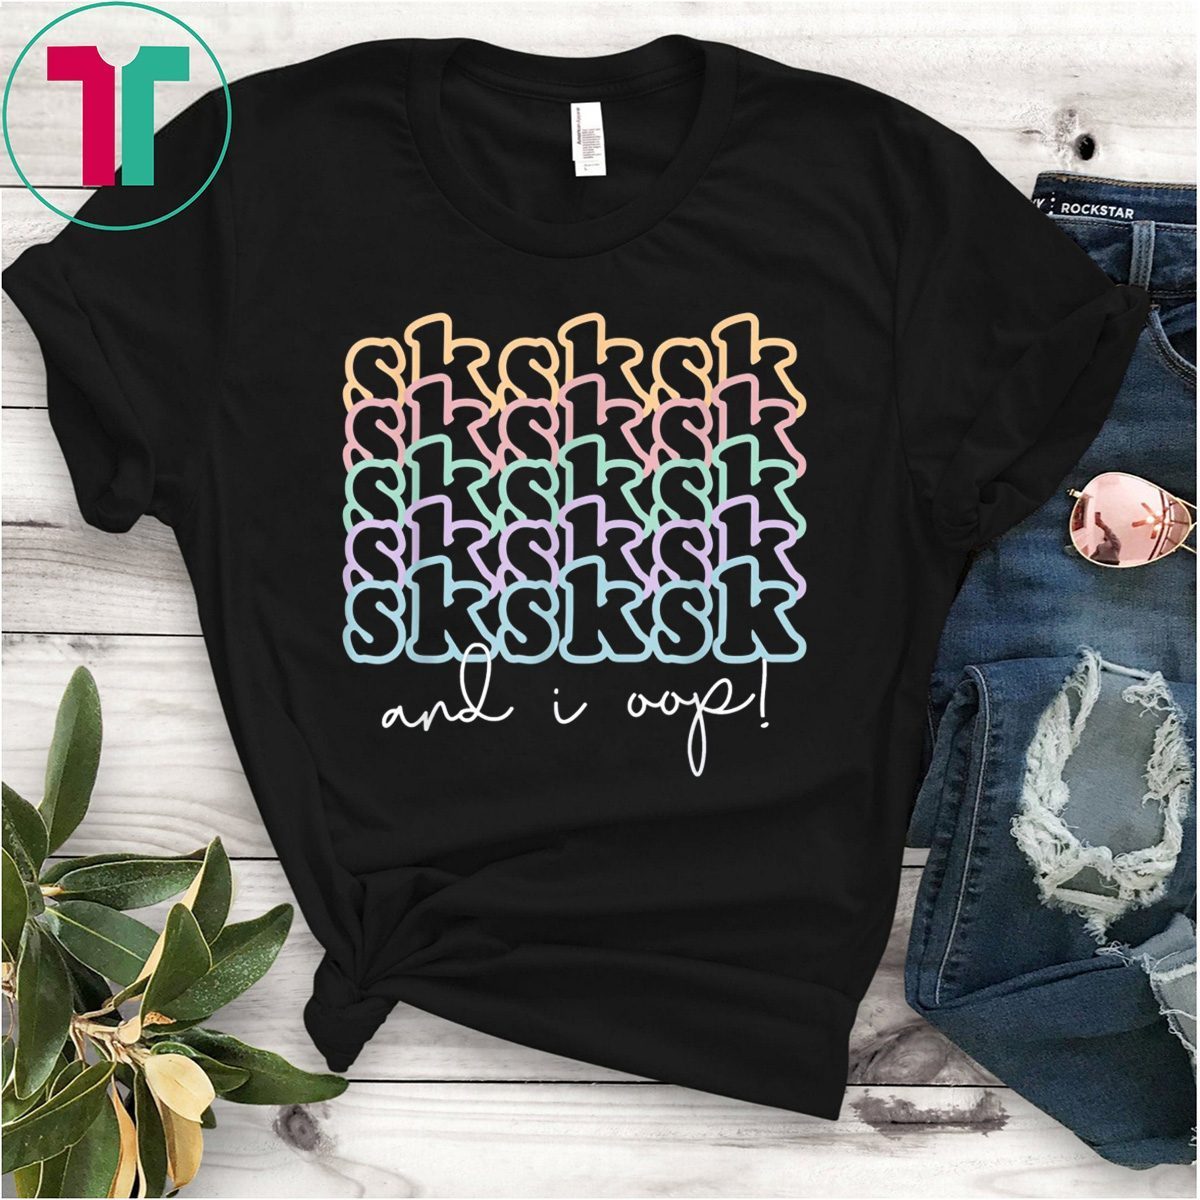 SkSkSk and i oop T-Shirt - OrderQuilt.com